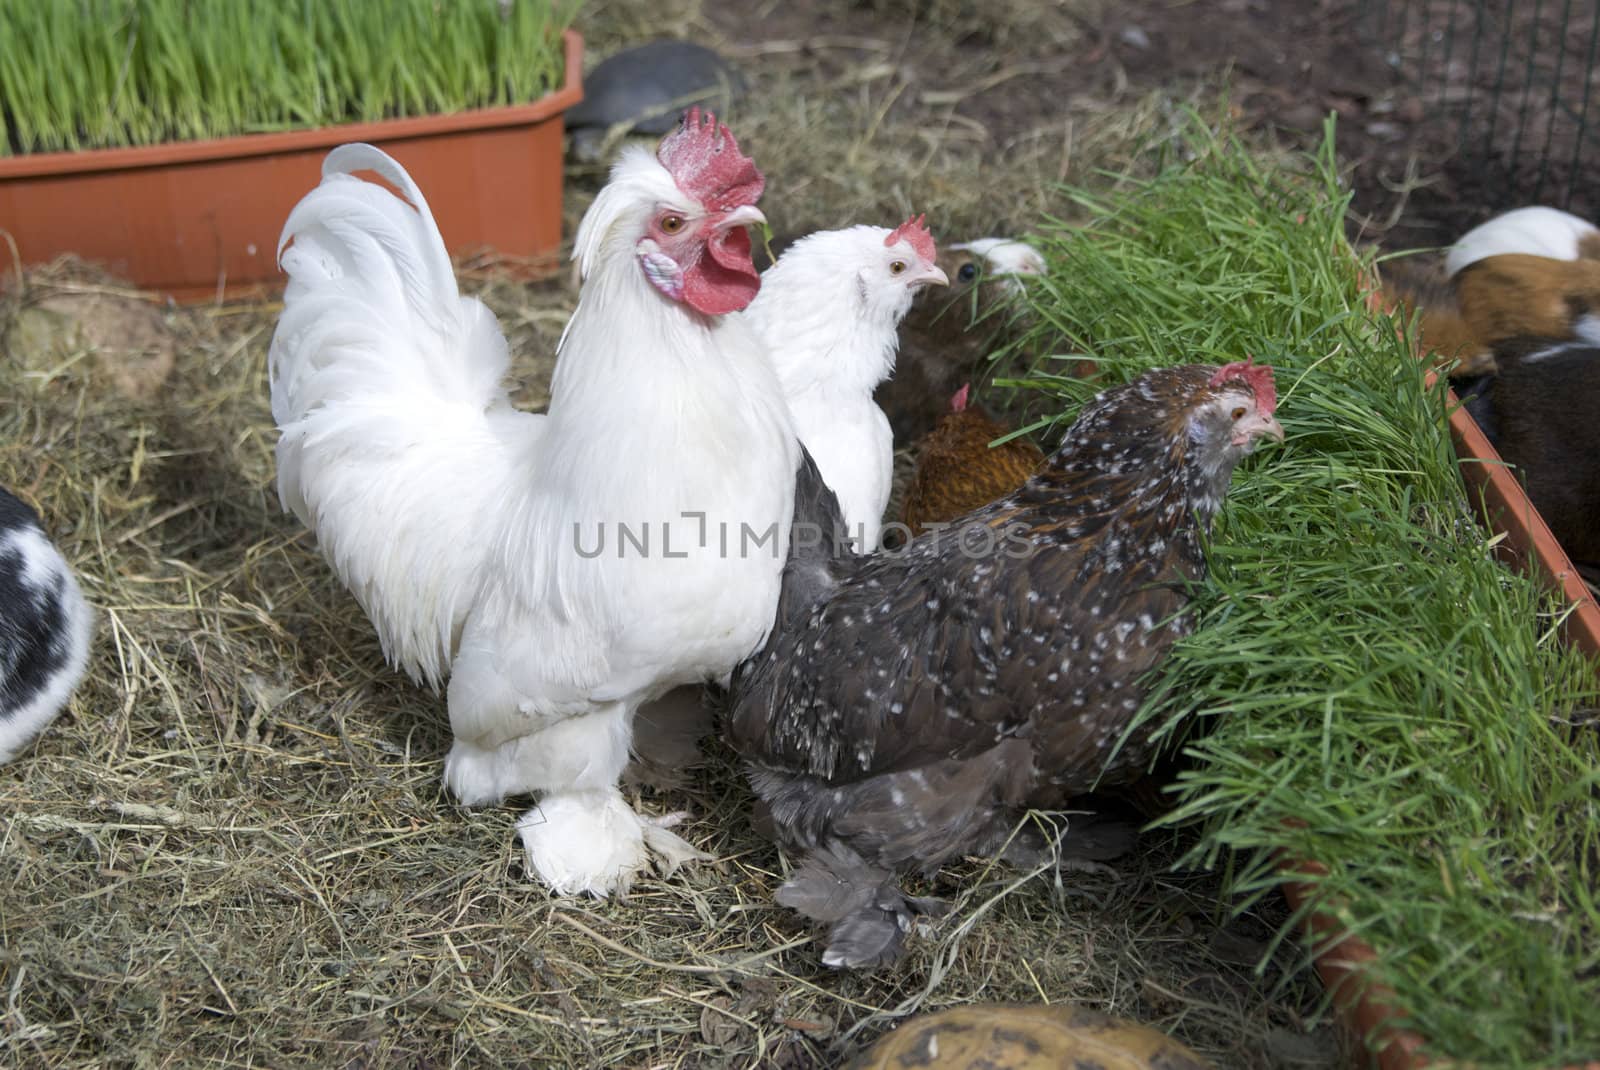 Three color chicken on grass`